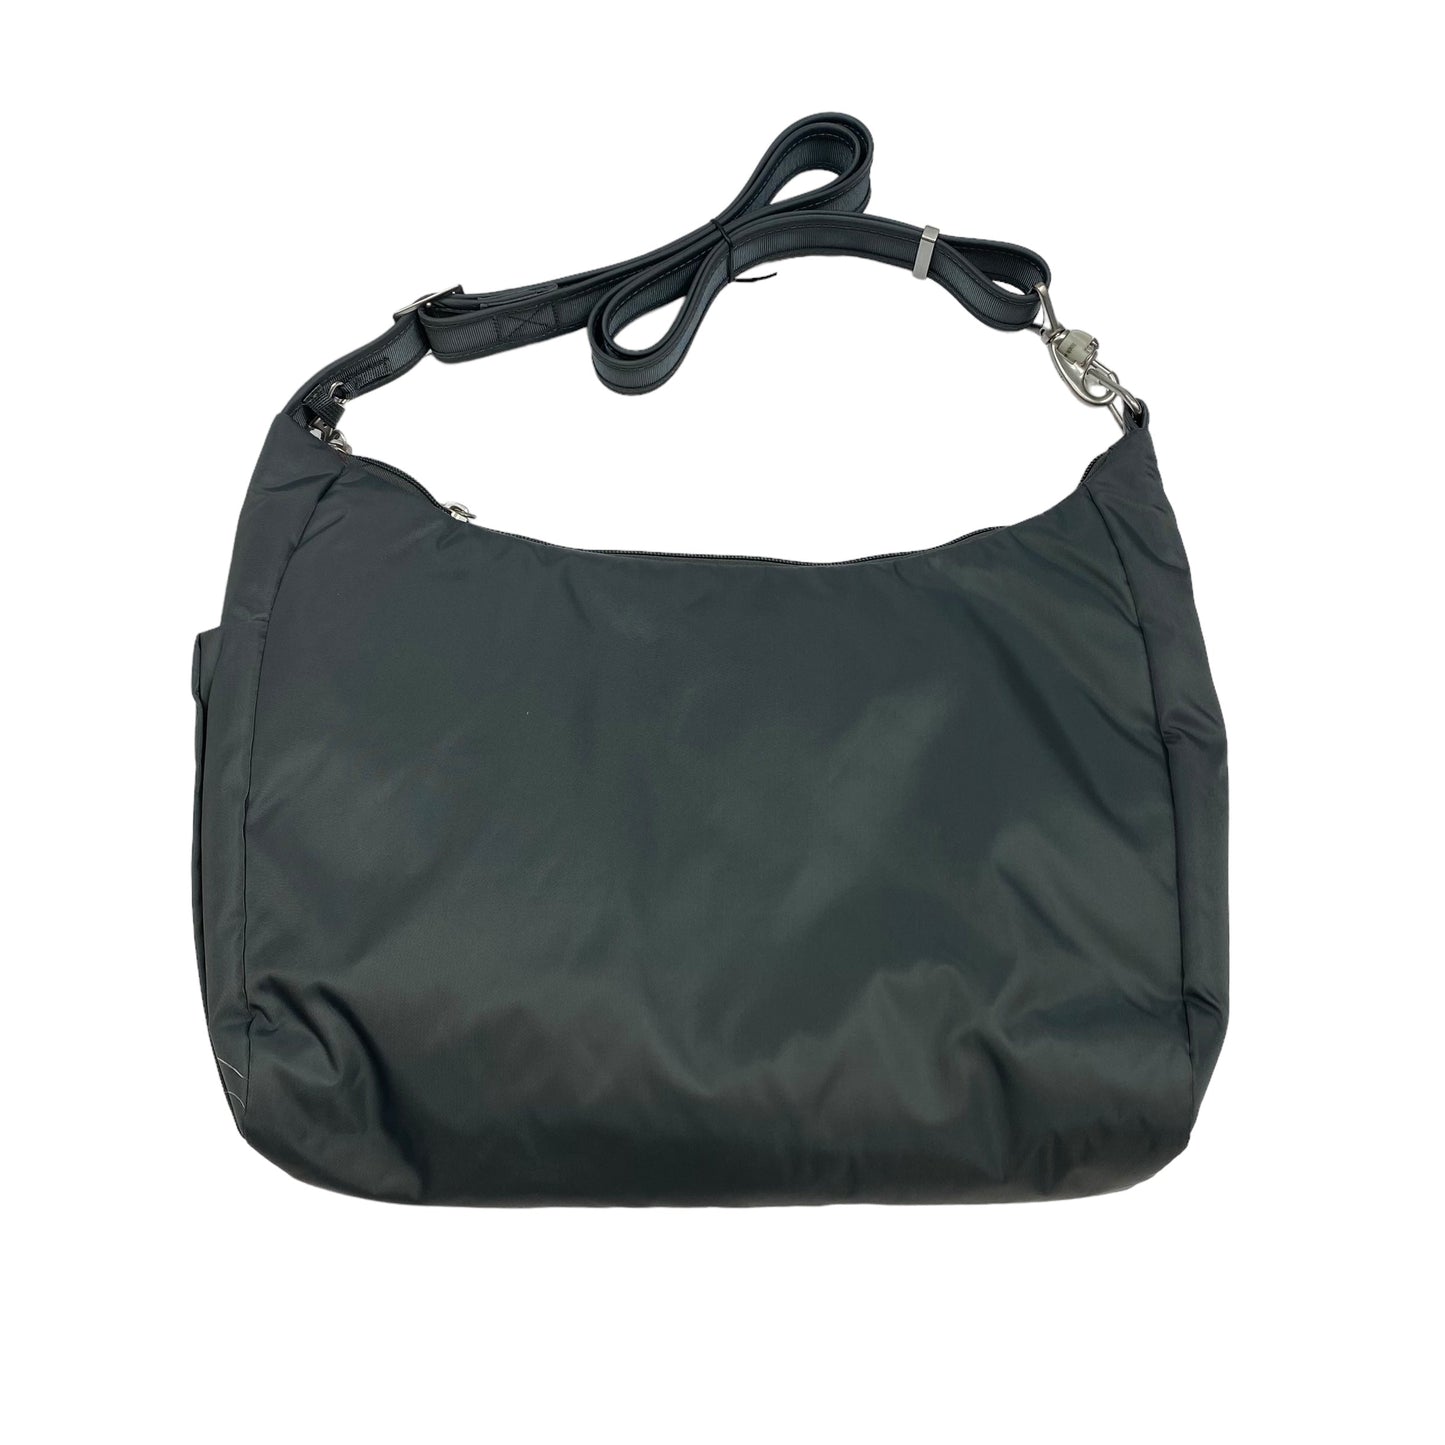 Handbag Clothes Mentor, Size Large